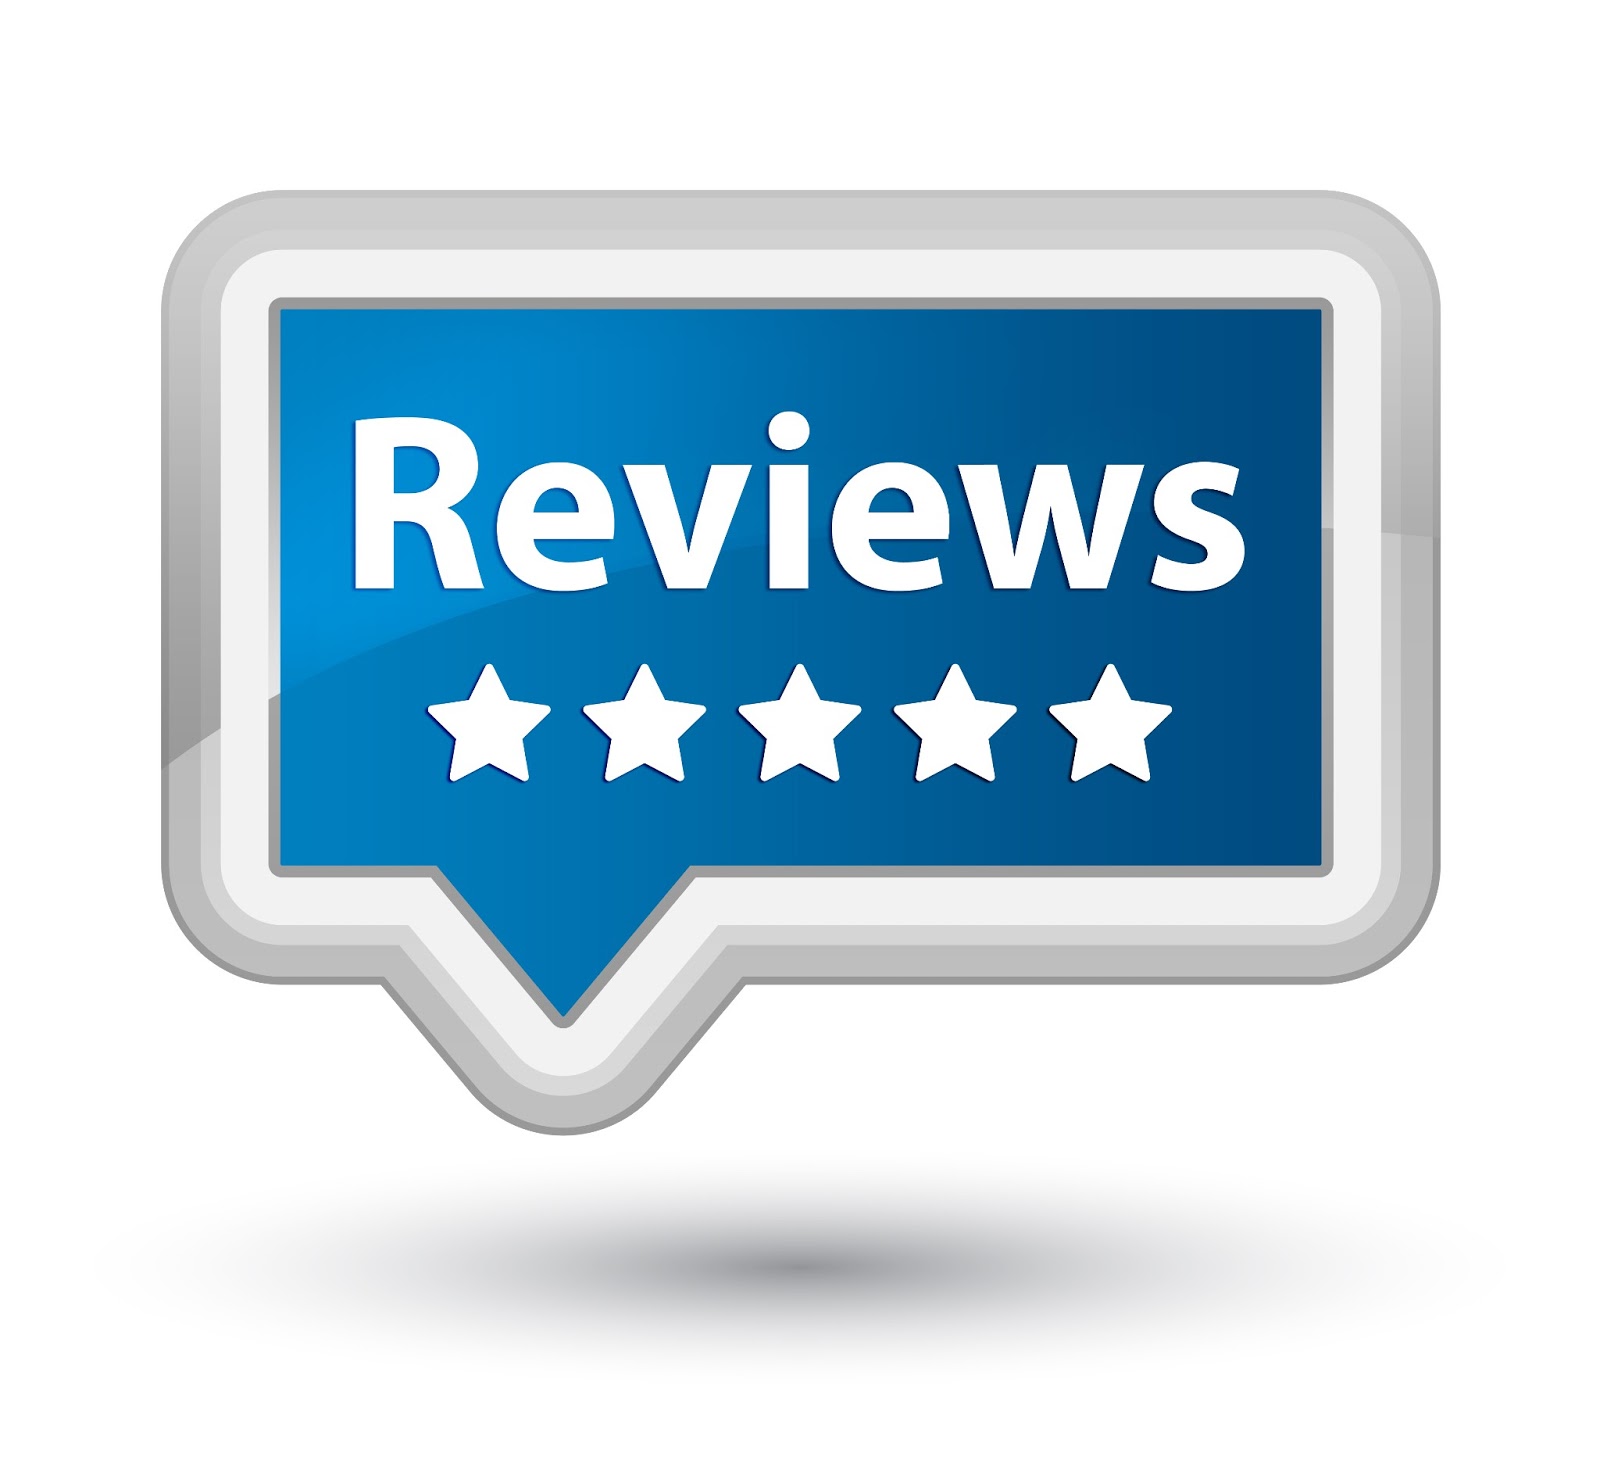 Reviews - Reviews - Reviews